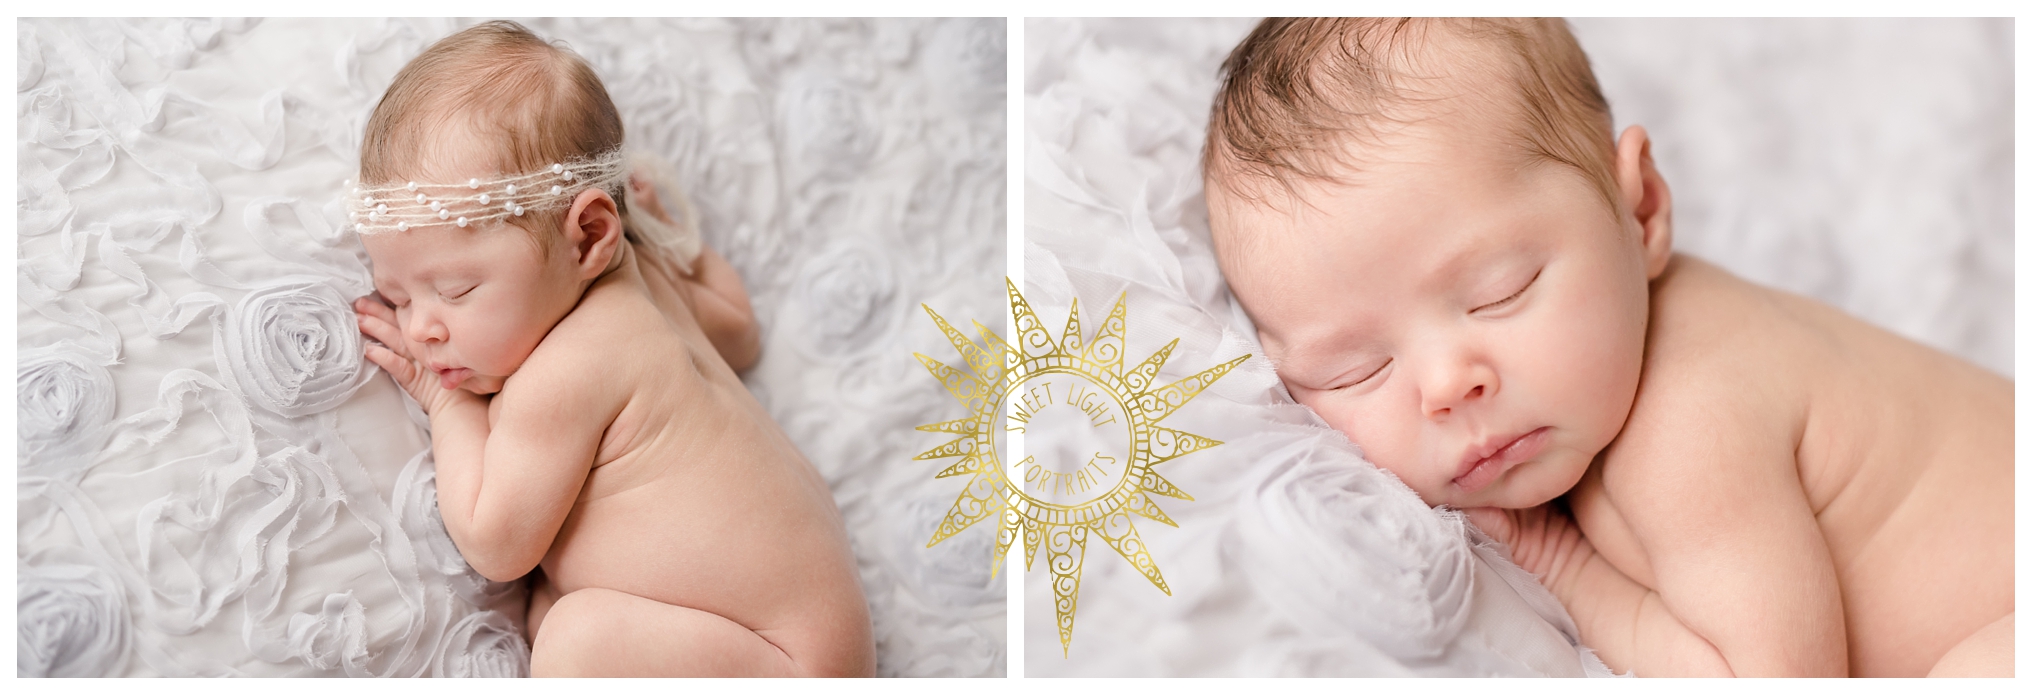 Newborn-Photos-Sweet-Light-Portraits33.jpg